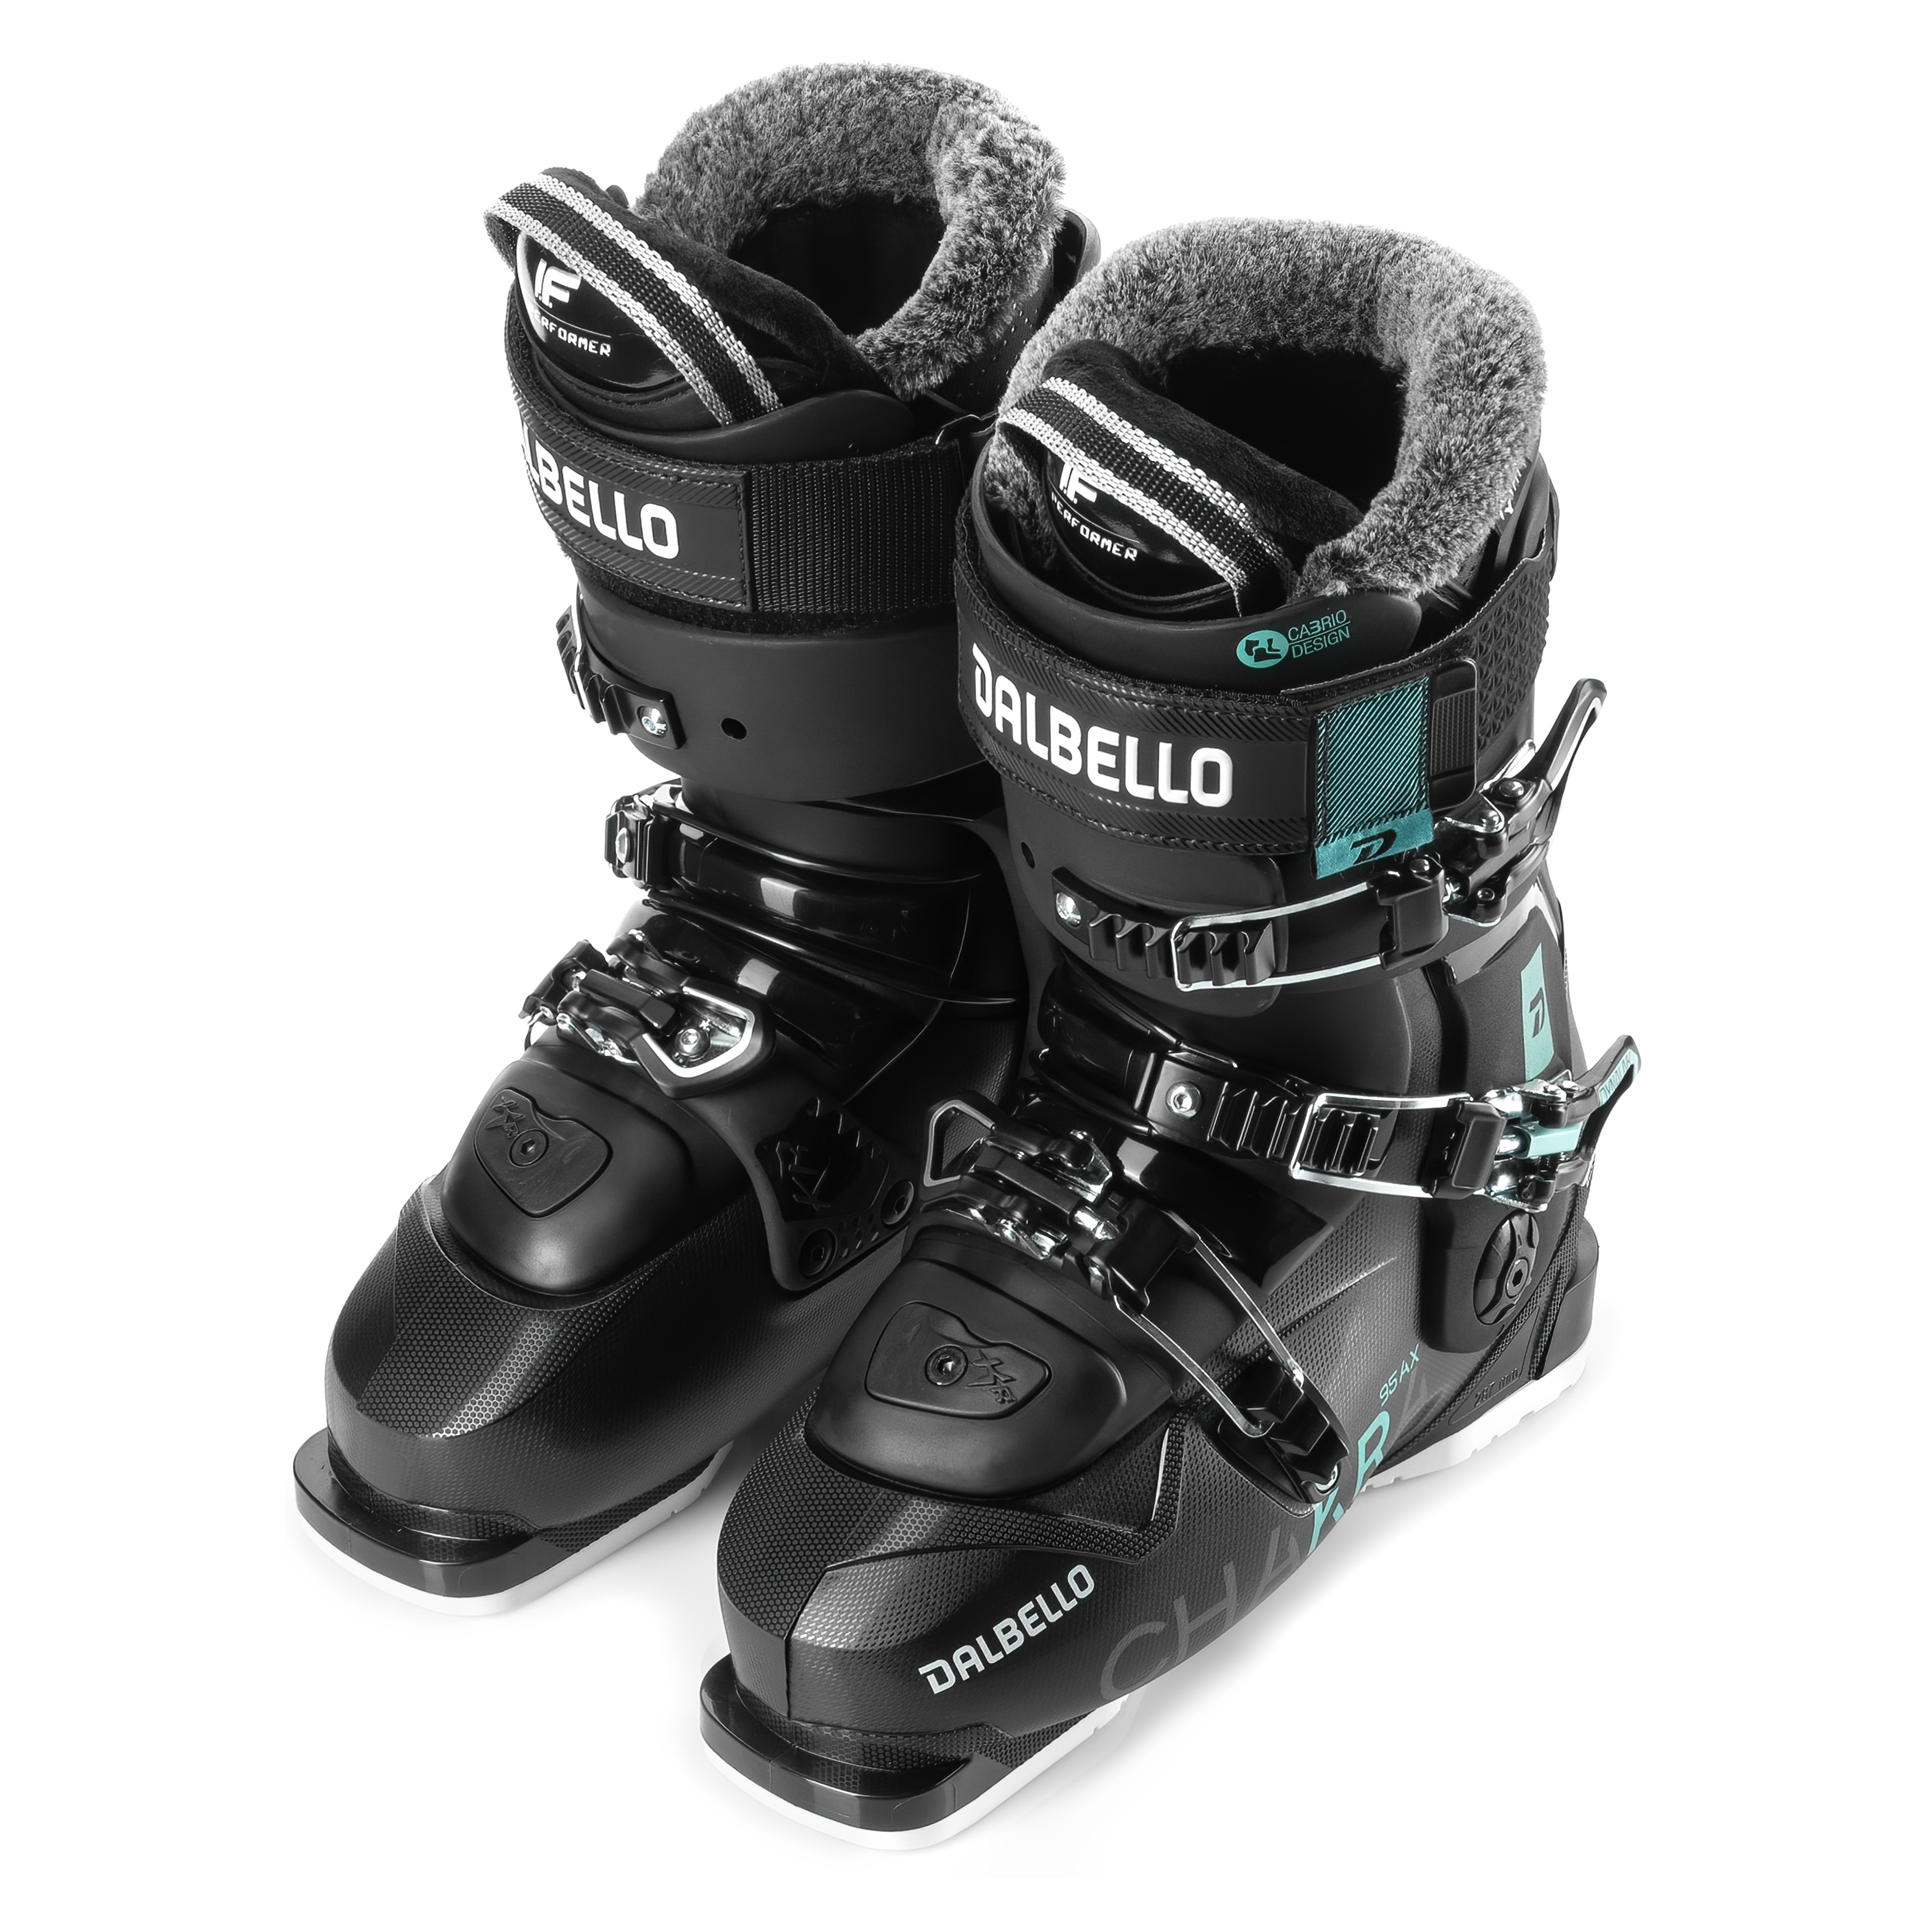 Лыжные ботинки для фрирайда Dalbello Chakra AX 95 Black (255)